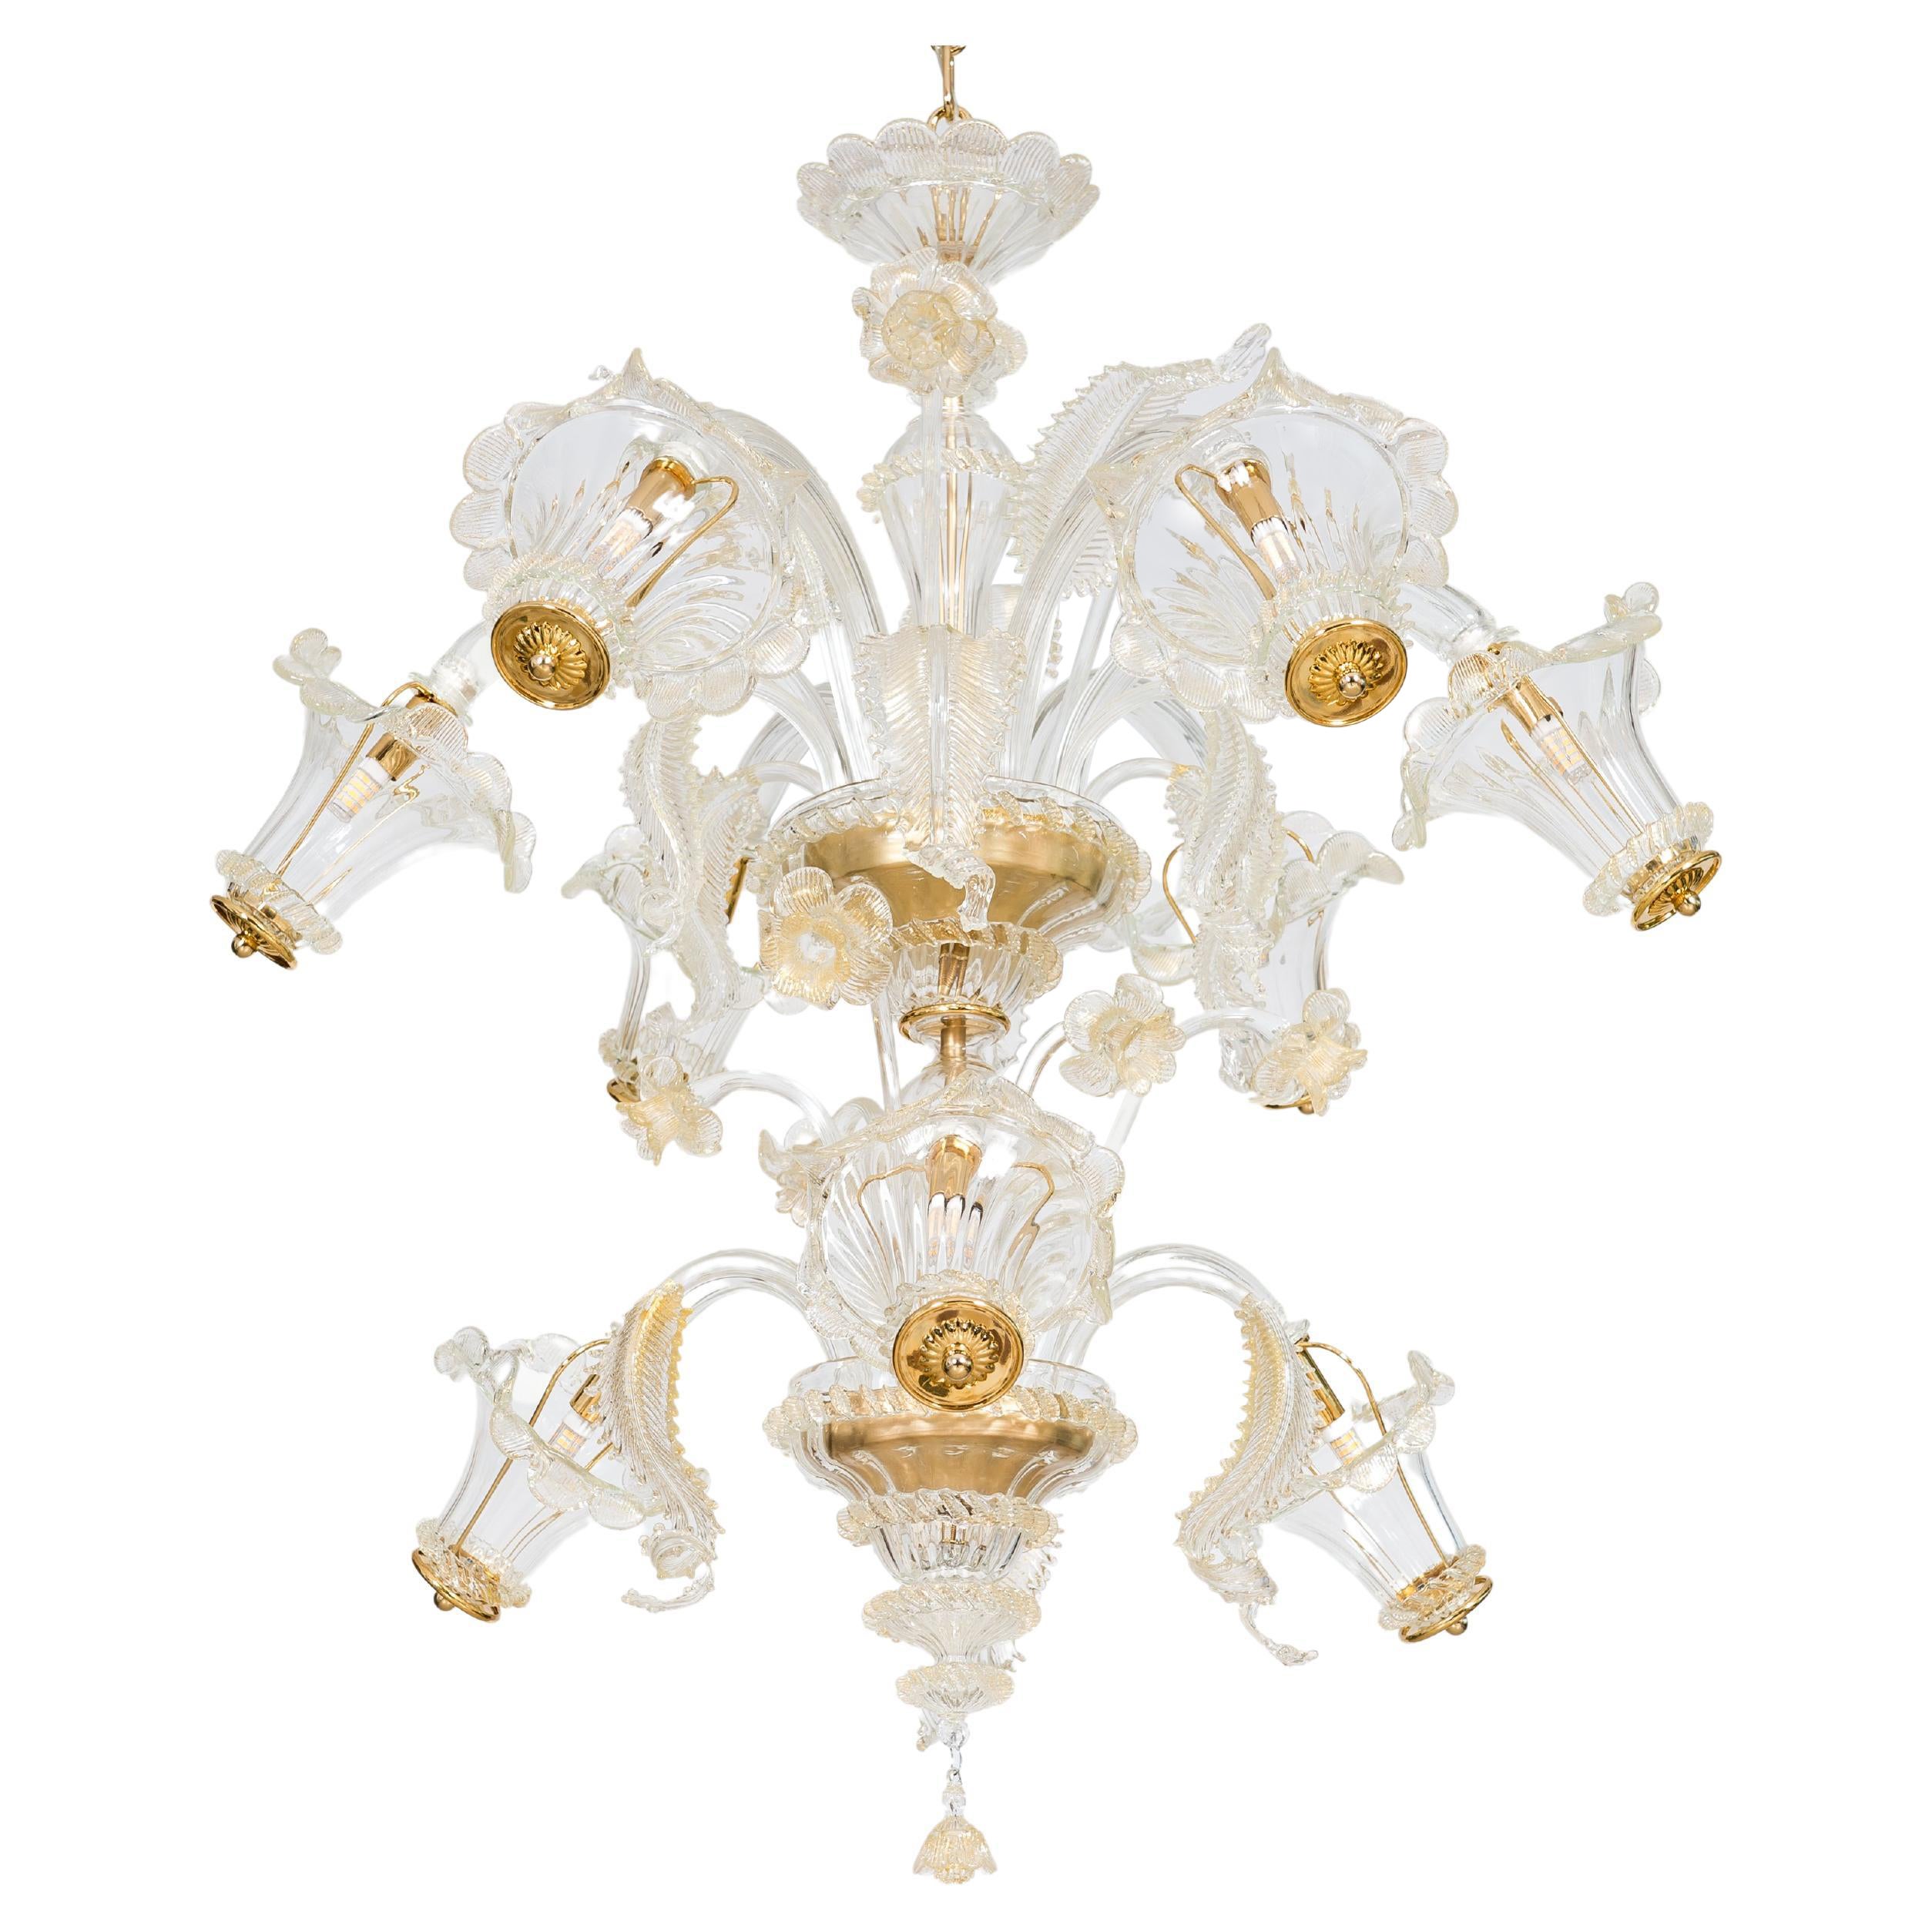 Goldener Murano-Glas-Kronleuchter mit 9 Lights, 21. Jahrhundert, Italien im Angebot